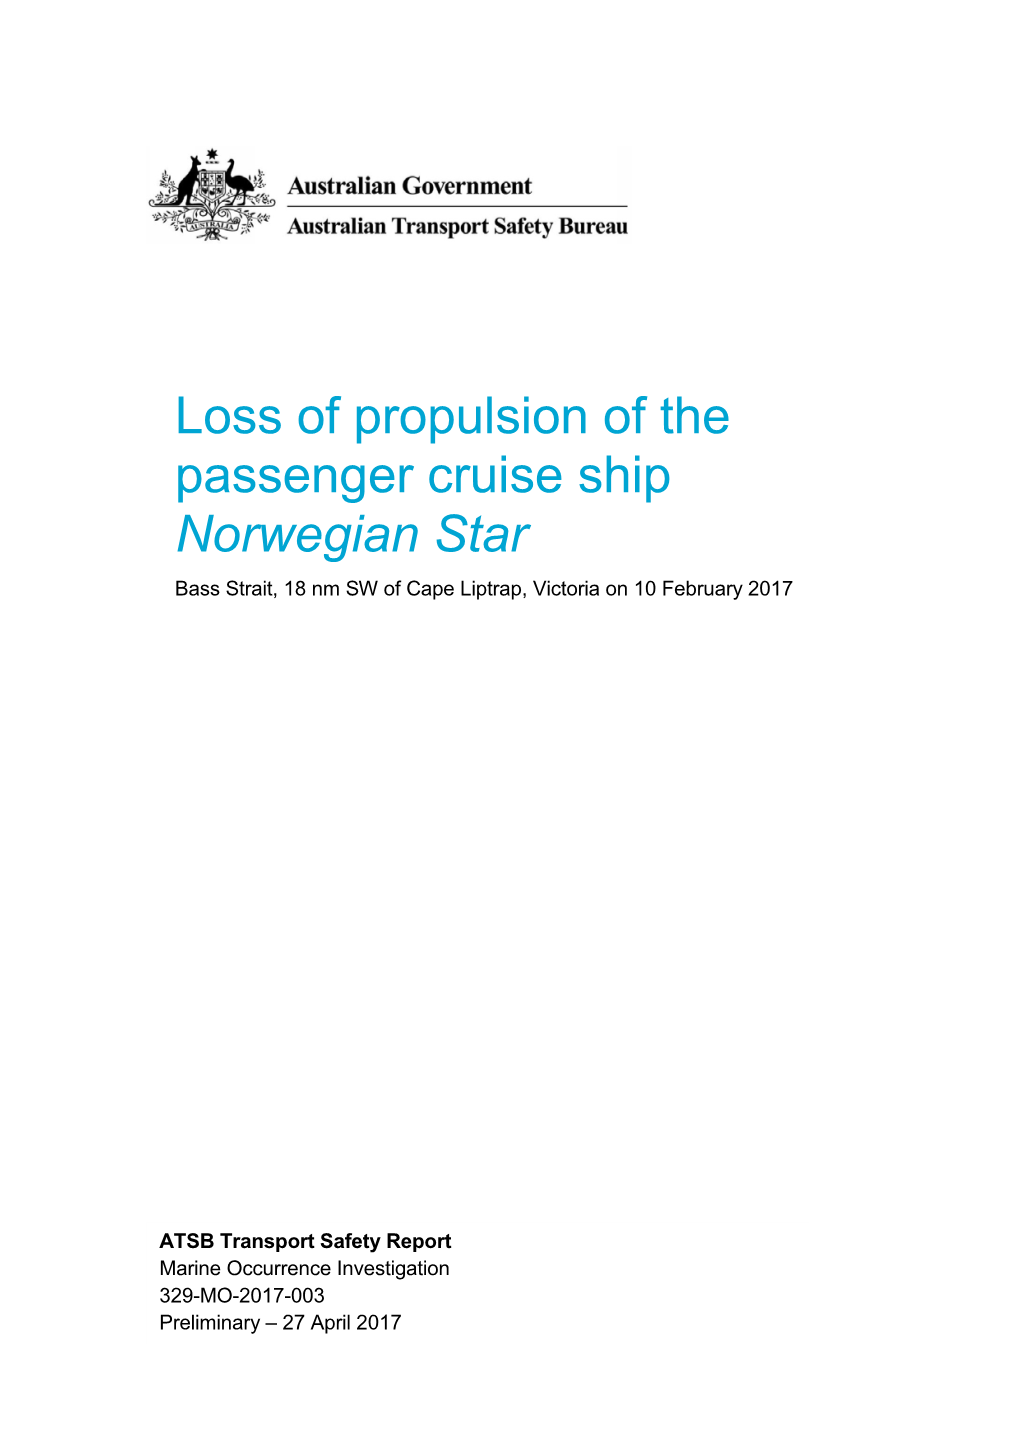 Loss of Propulsion Norwegian Star